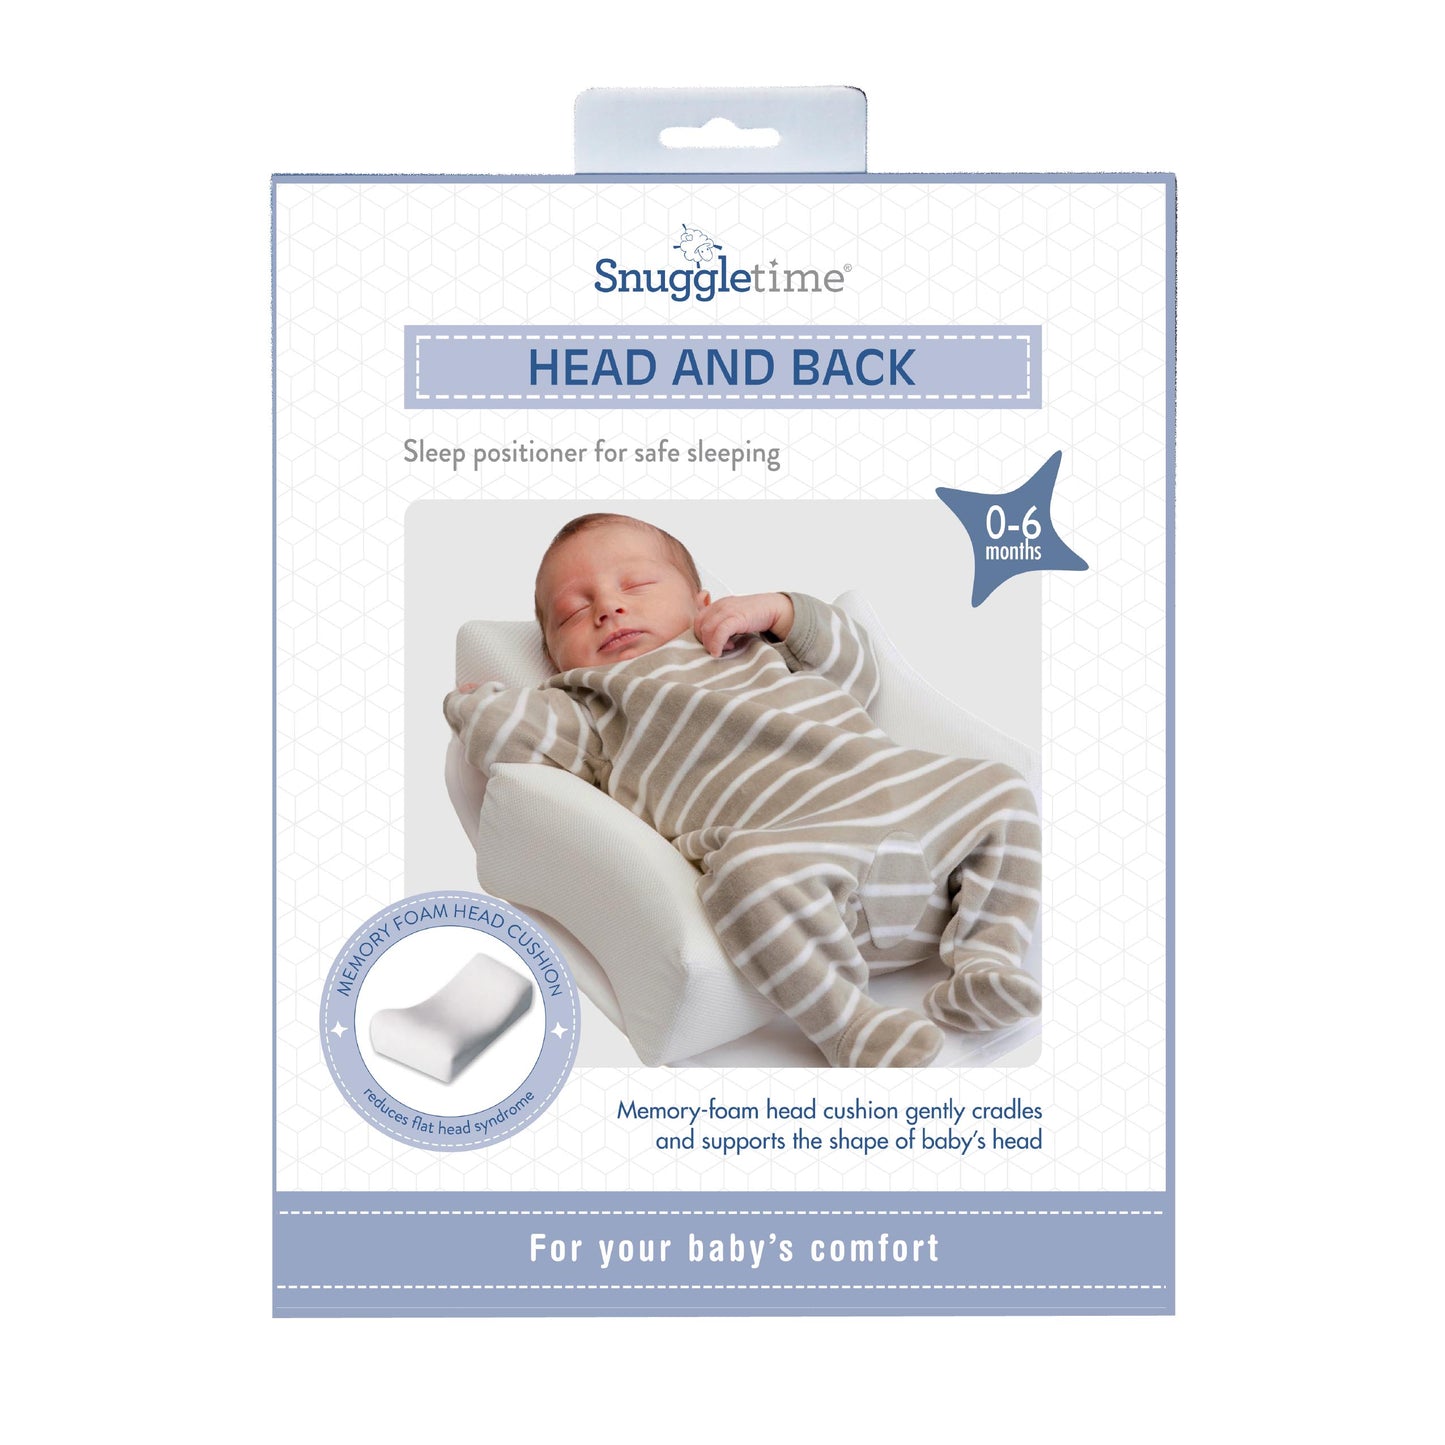 Snuggletime Head and Back Sleep Positioner